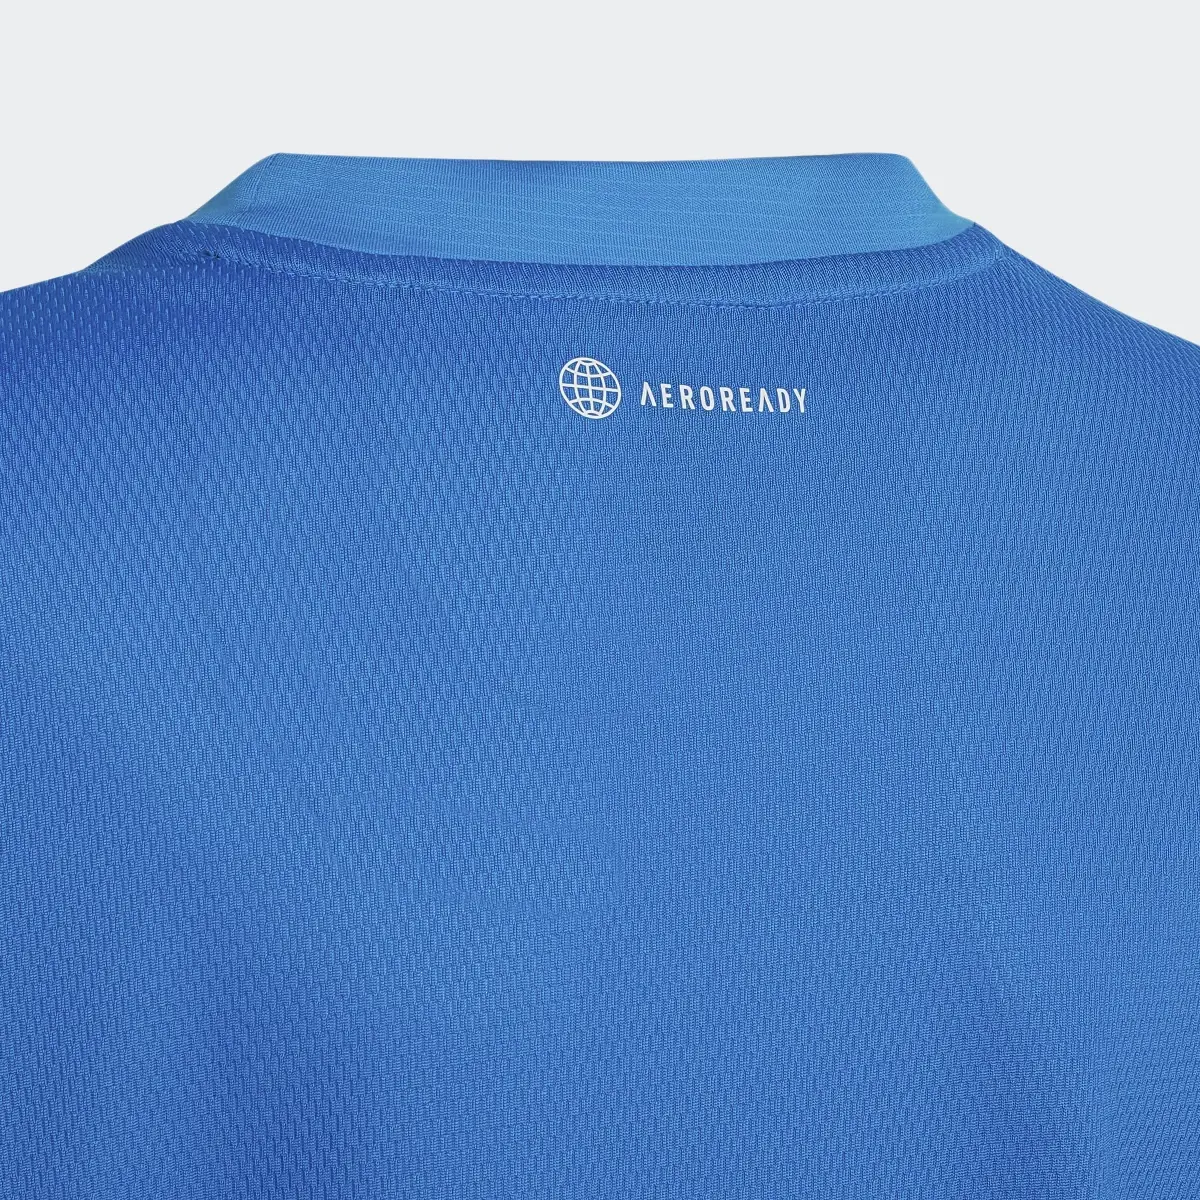 Adidas Designed for Sport AEROREADY Training T-Shirt. 3